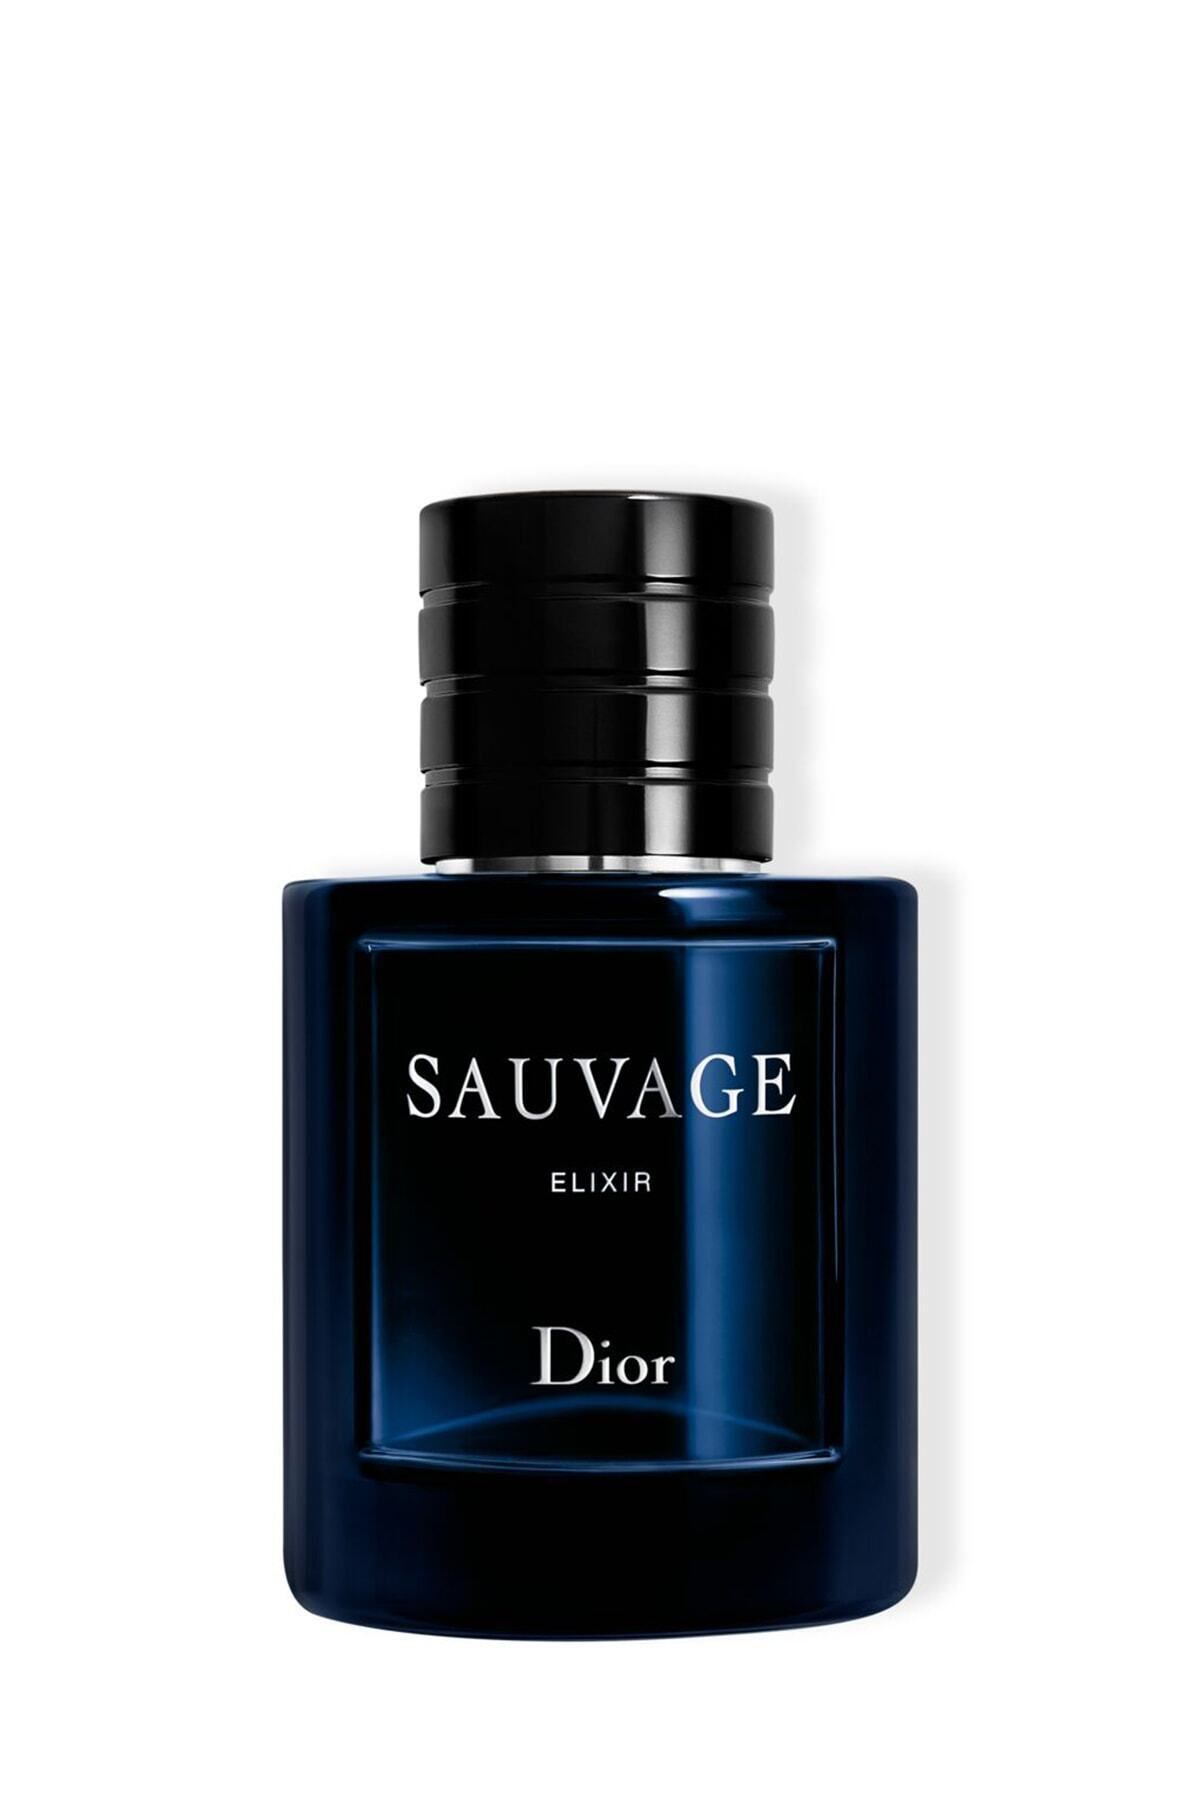 Dior SAUVAGE ELİXİR EDP UNİQUE FRAGRANCE MEN'S PERFUME 60 ml DEMBA1253